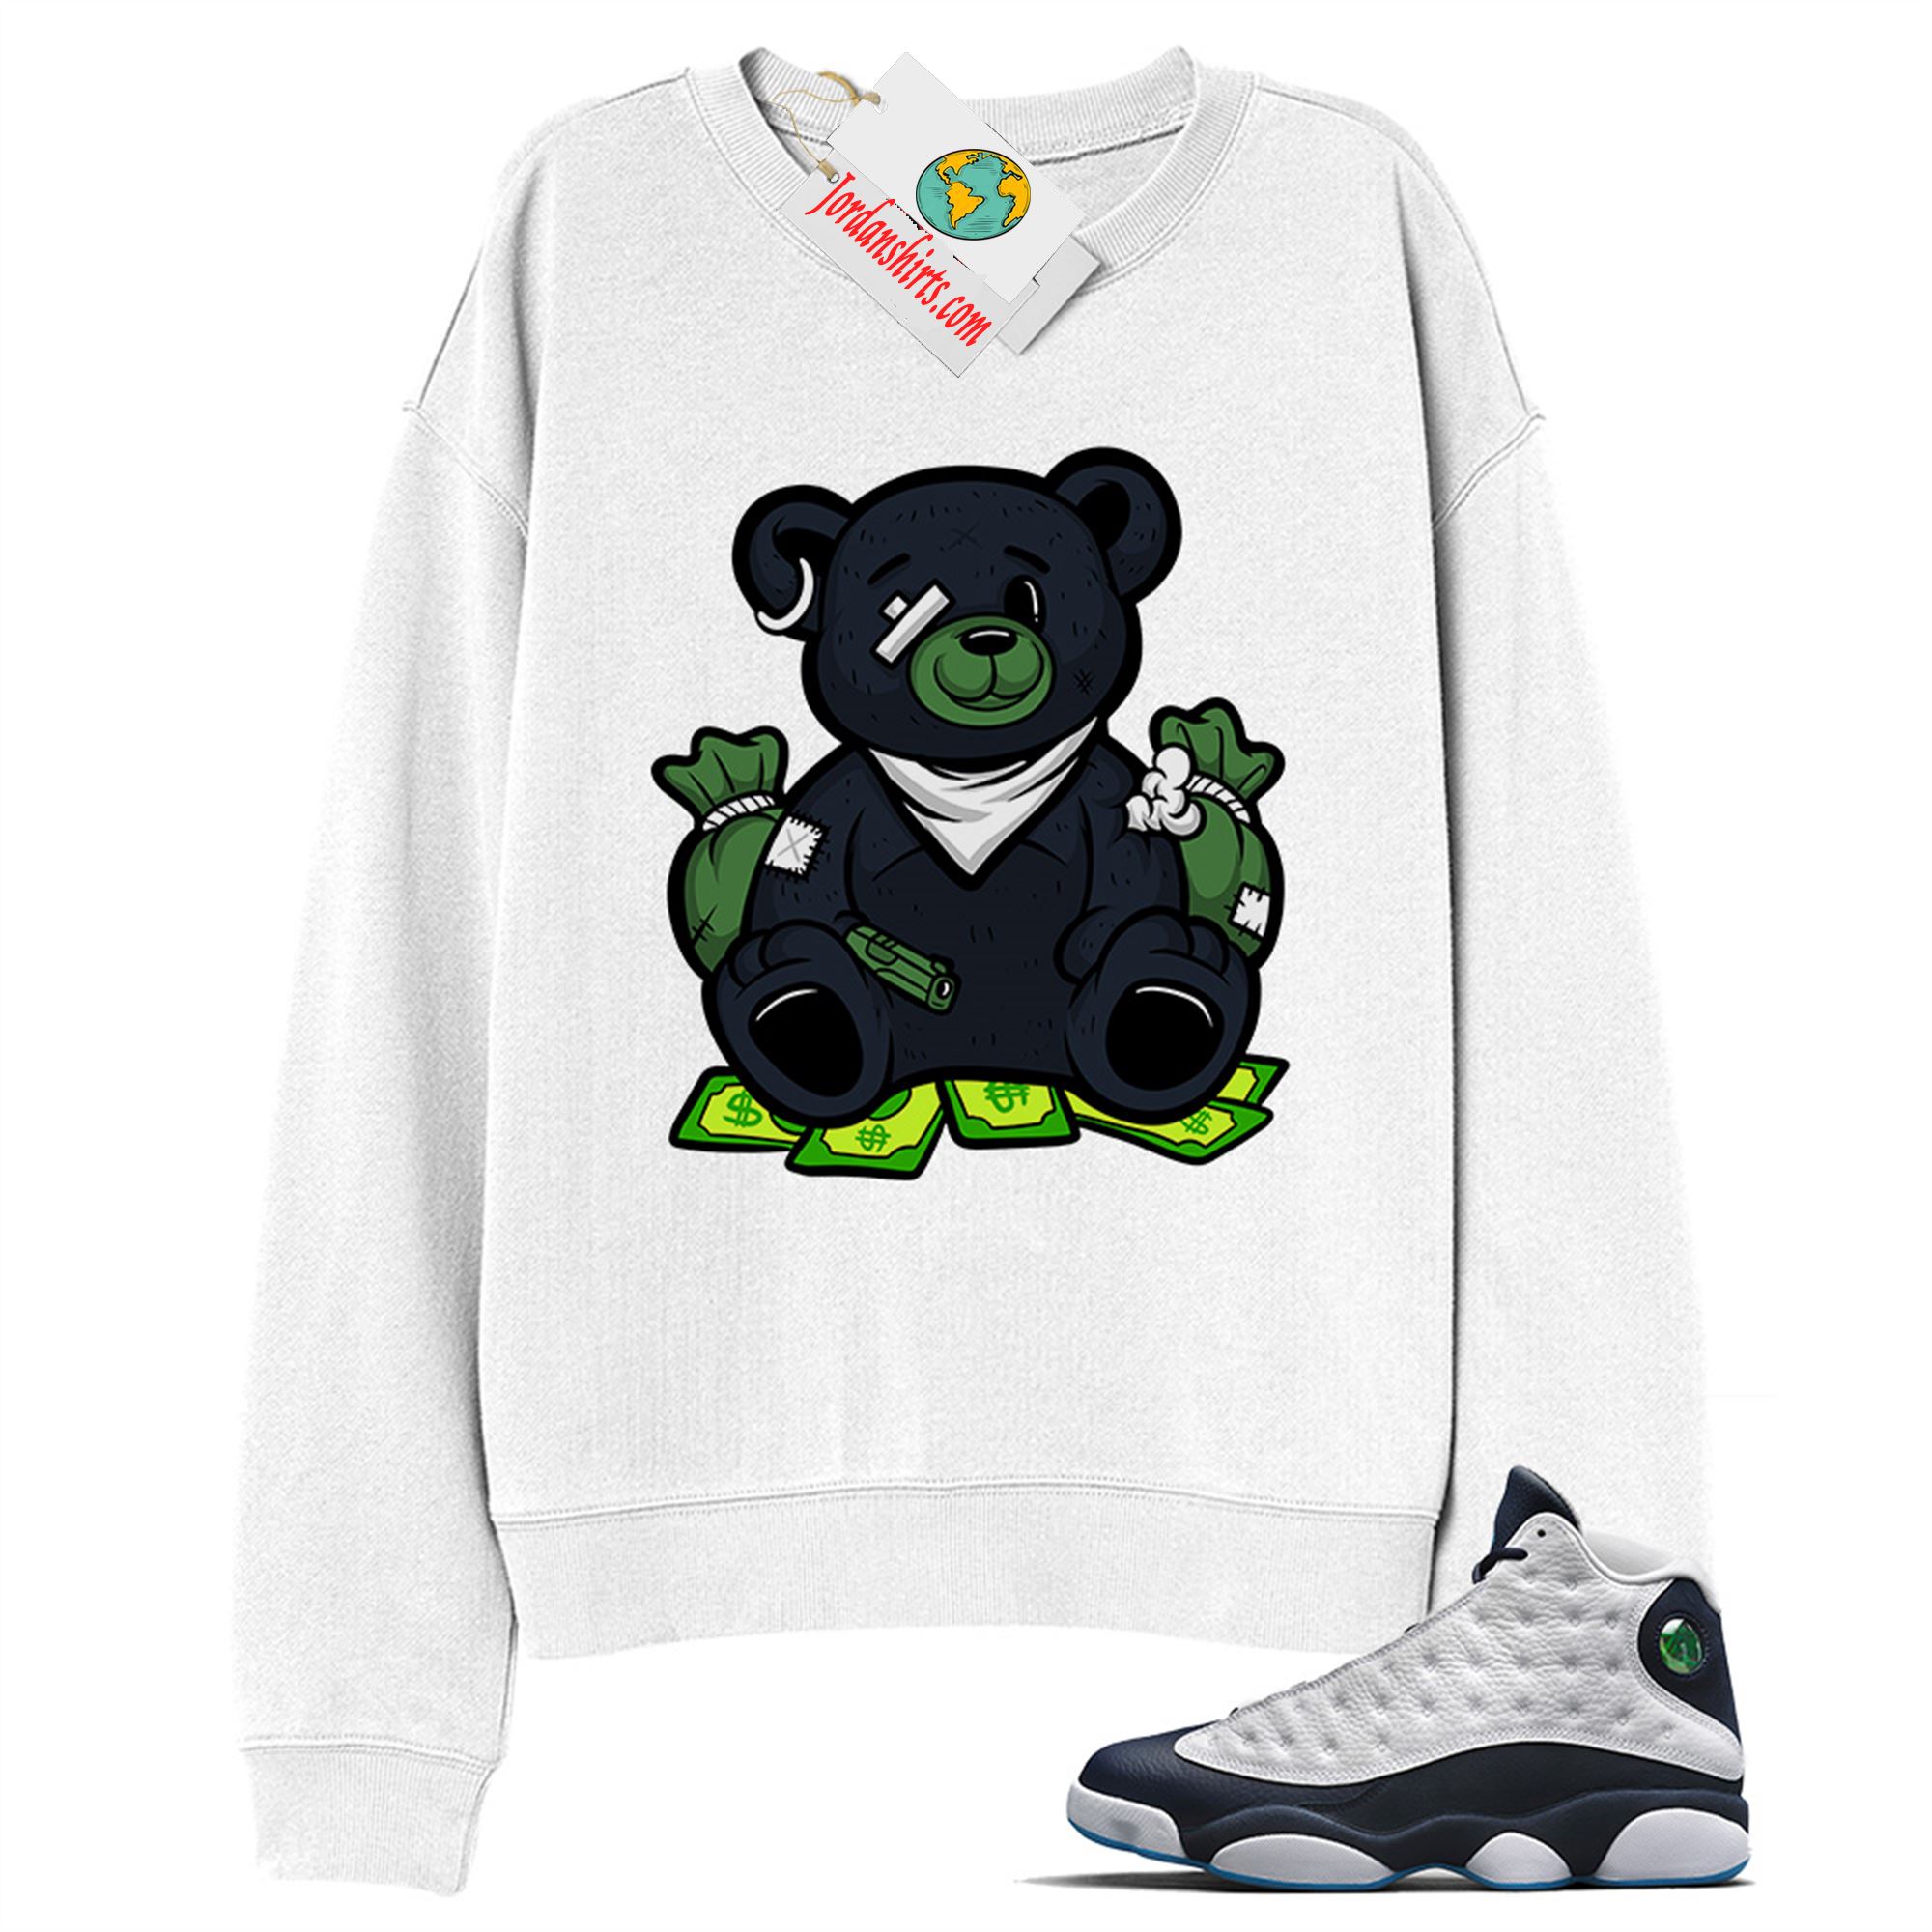 Jordan 13 Sweatshirt, Rich Teddy Bear Gangster White Sweatshirt Air Jordan 13 Obsidian 13s Full Size Up To 5xl